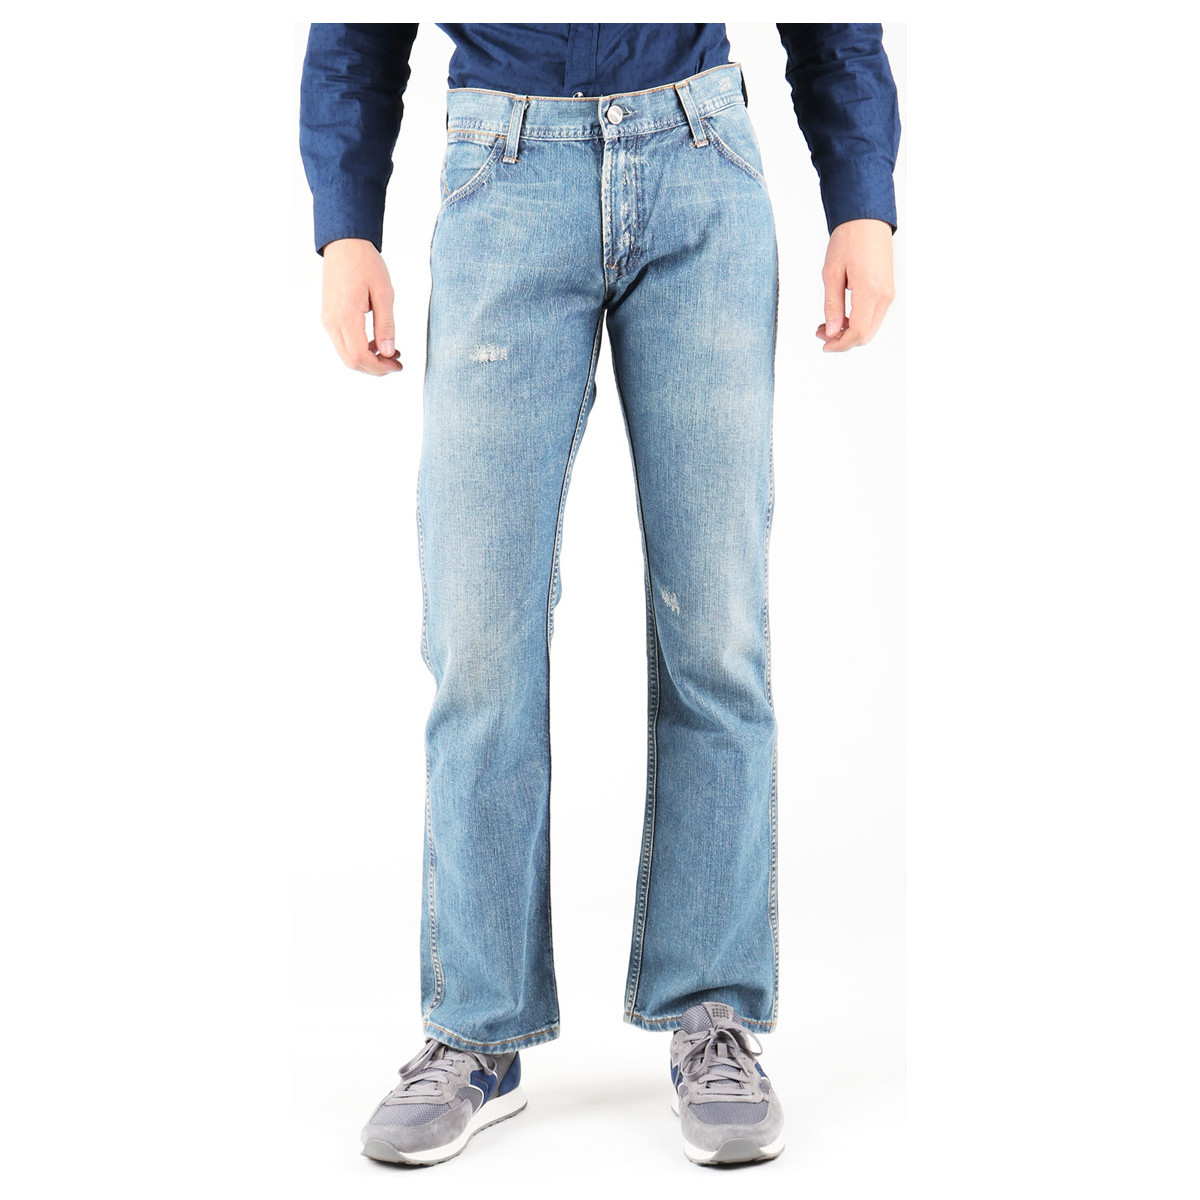 Oblačila Moški Jeans straight Wrangler Dayton W179EB497 Modra